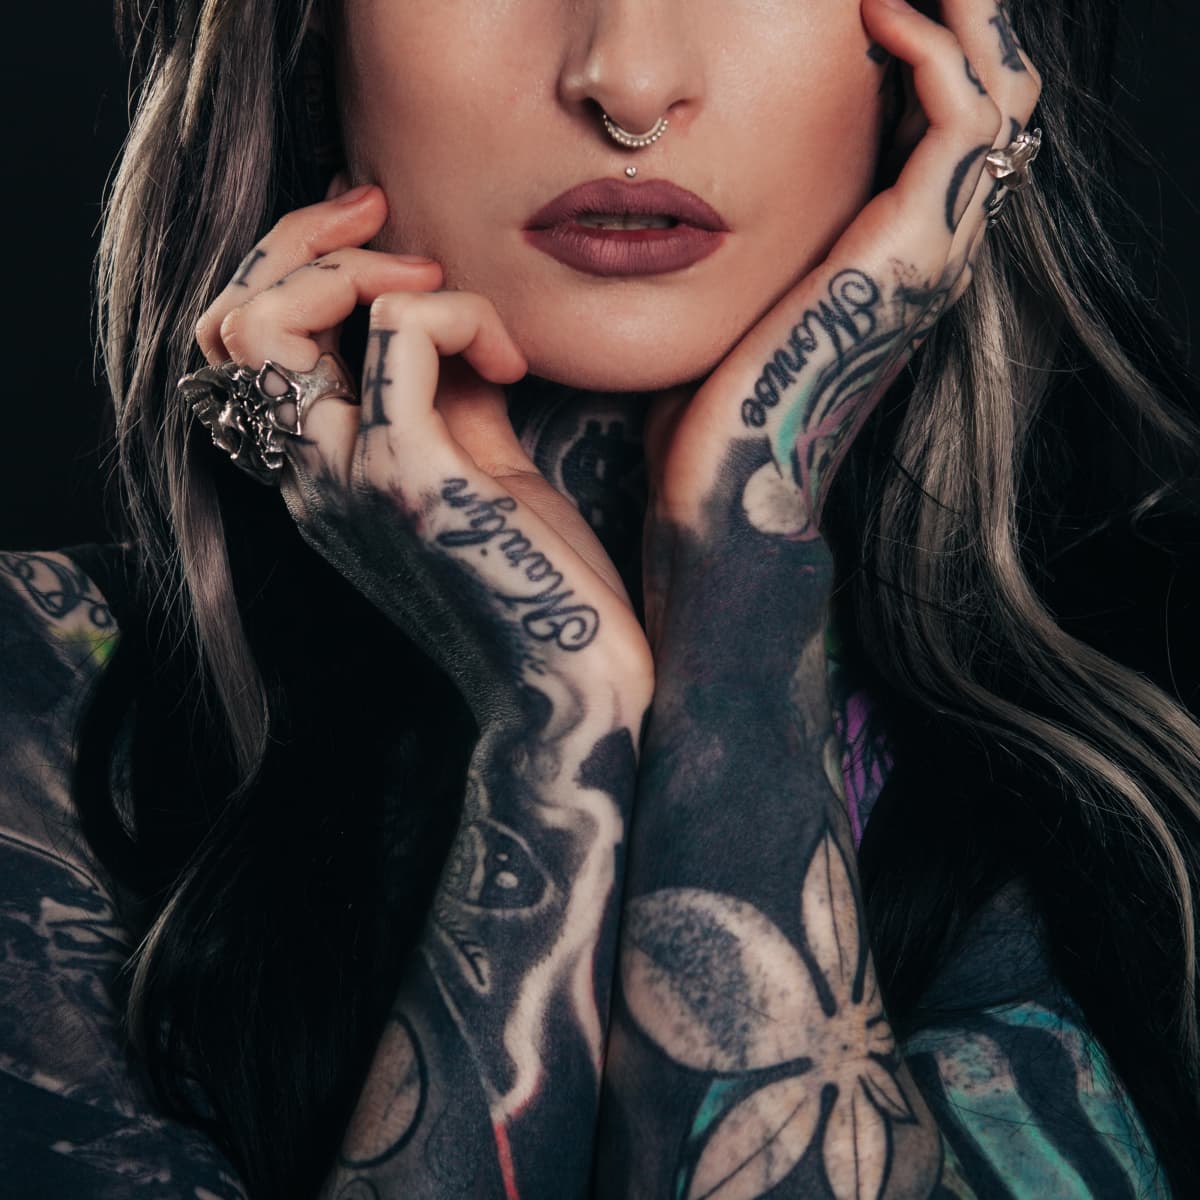 Girlfriend Tattoos Image & Photo (Free Trial) | Bigstock